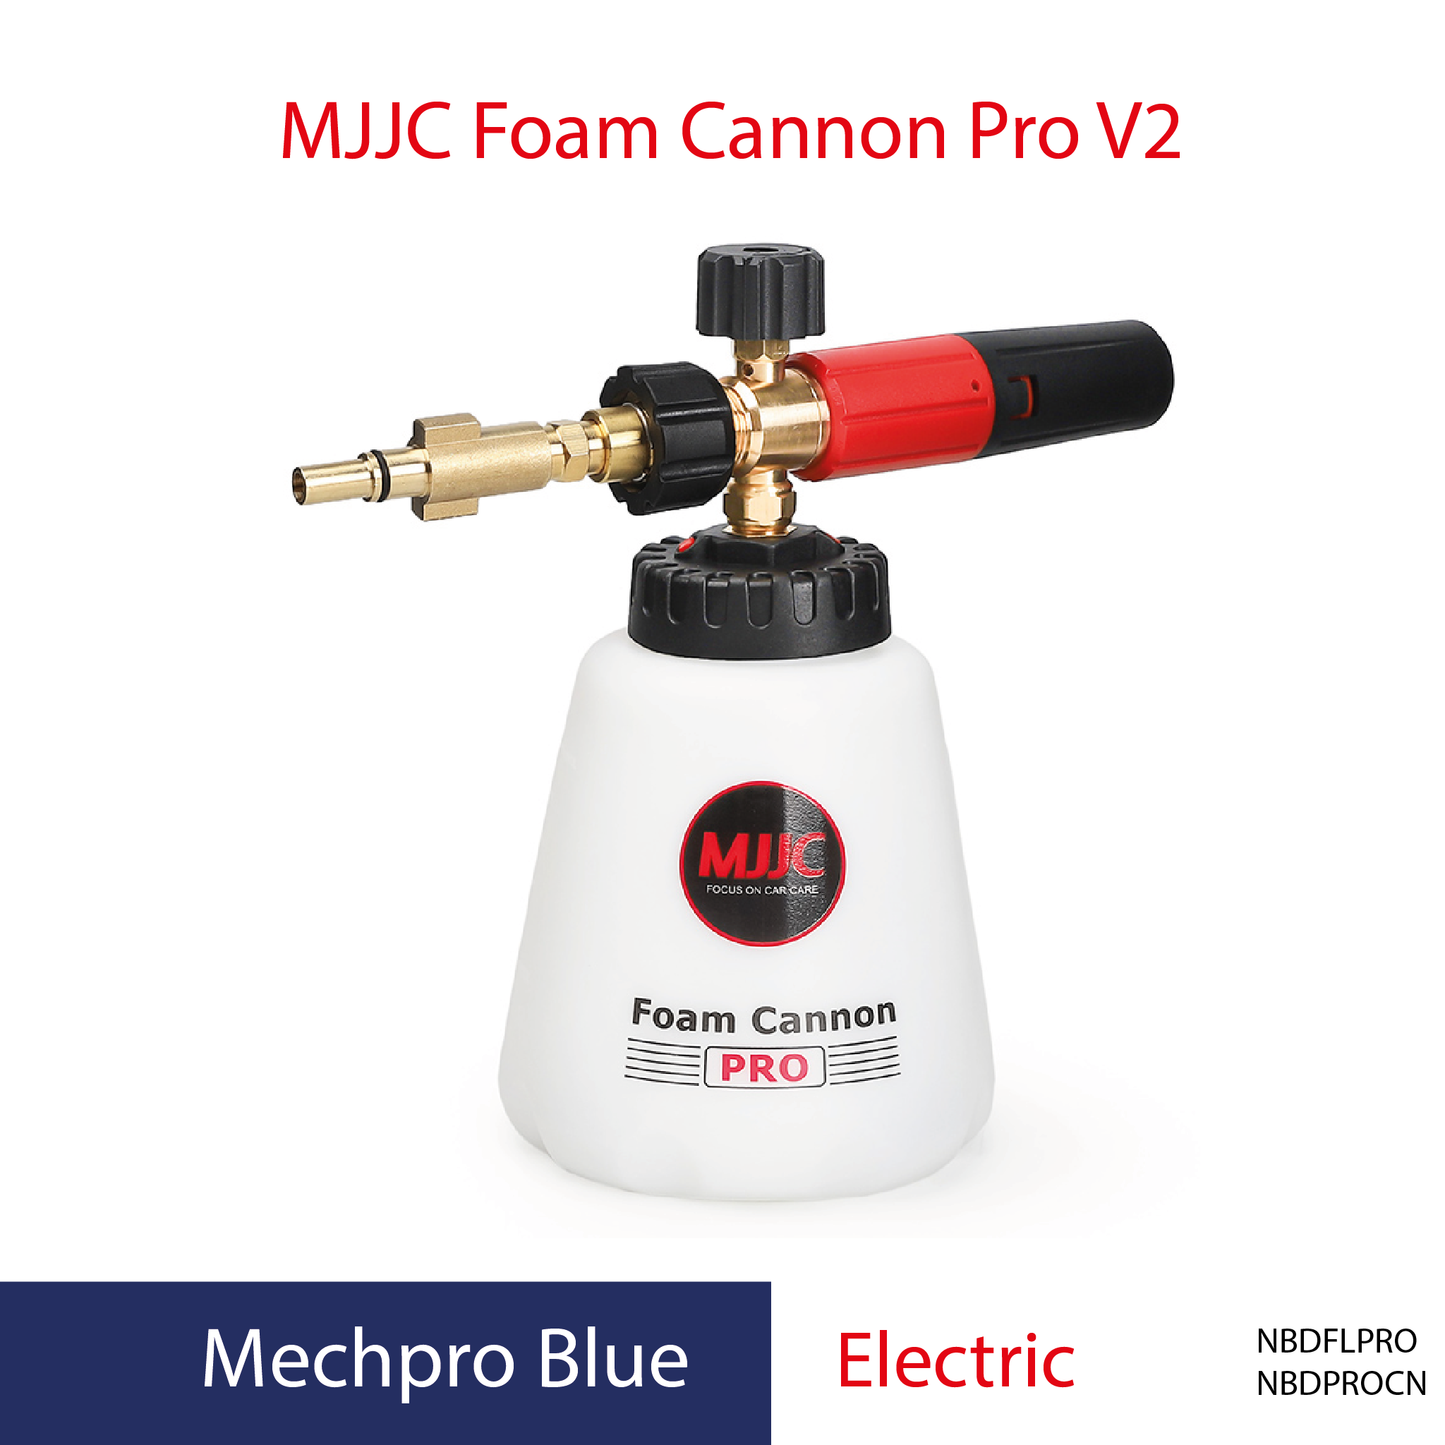 Mechpro Blue pressure washer - MJJC Foam Cannon Pro V2 (Pressure Washer Snow Foam Lance Gun)